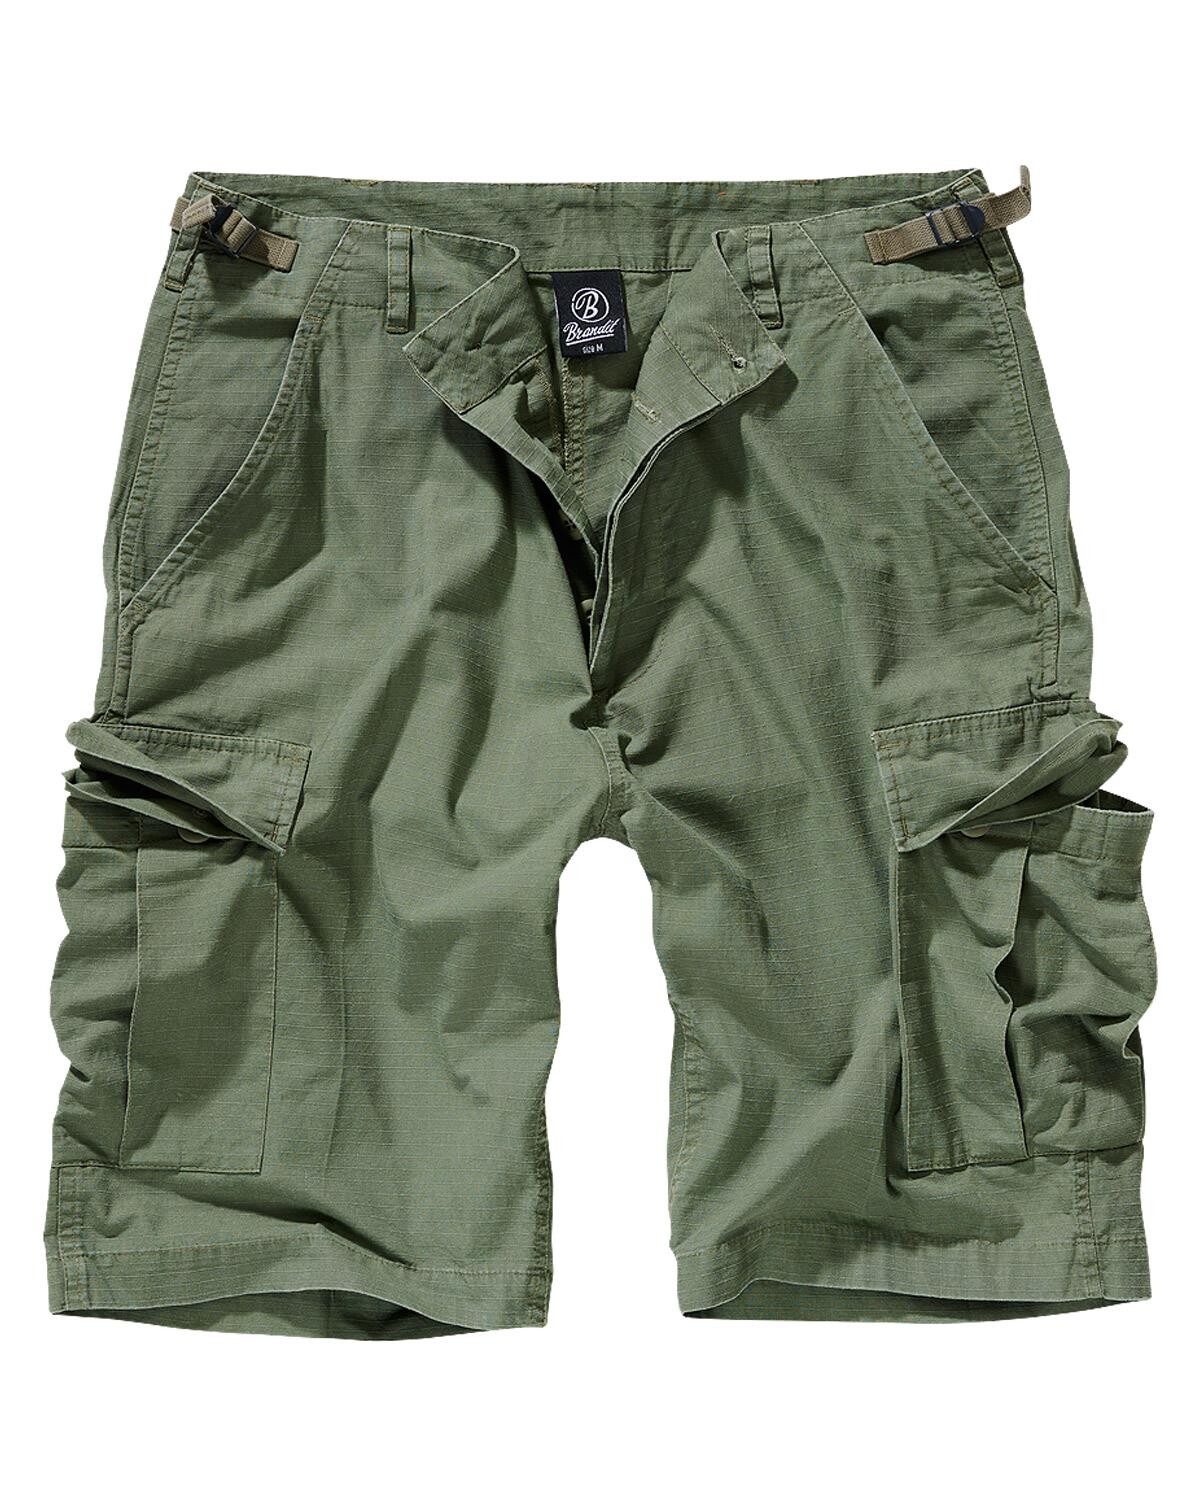 Brandit BDU Ripstop Shorts (Oliven, M)